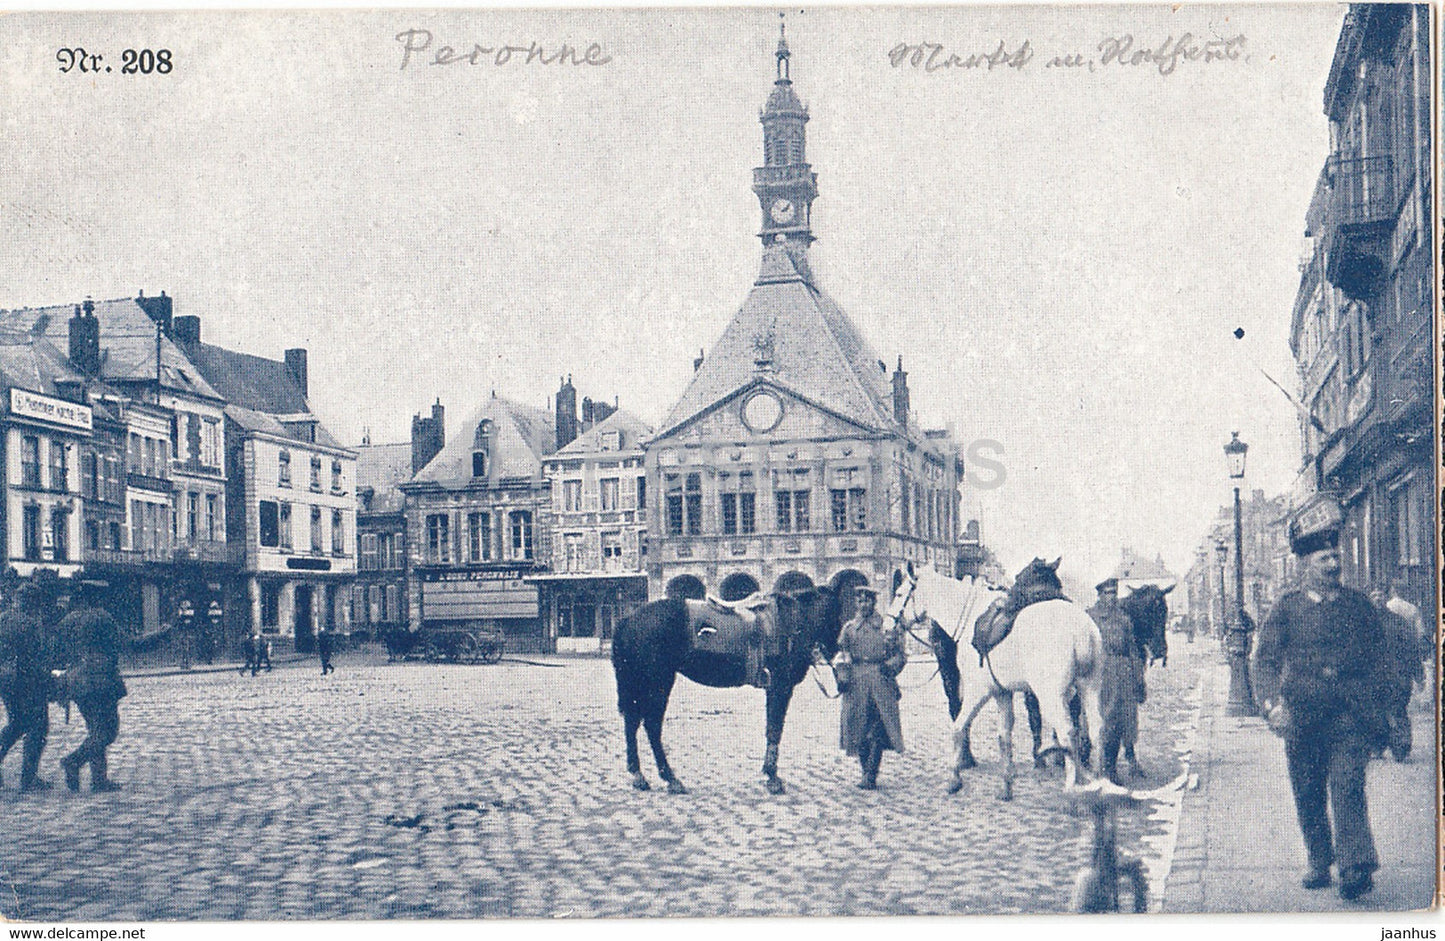 Peronne - Markt und Rathaus - Feldpostkarte - military - horse - 208 - old postcard - France - used - JH Postcards